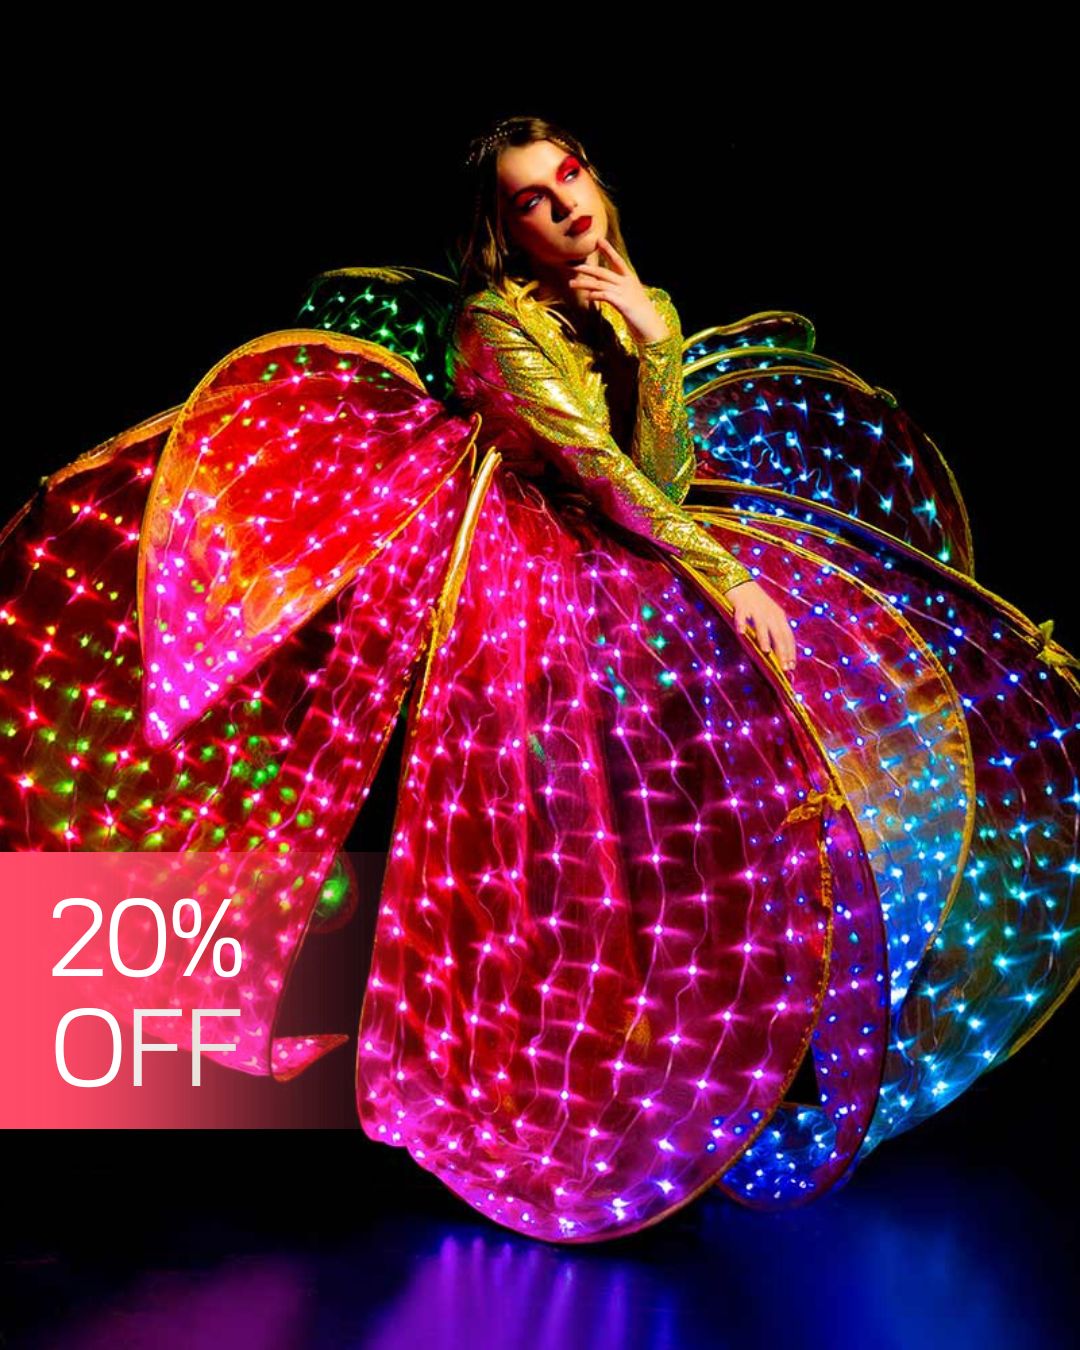 LED Glow-in-the-Dark Flower Dress for Artist Performances